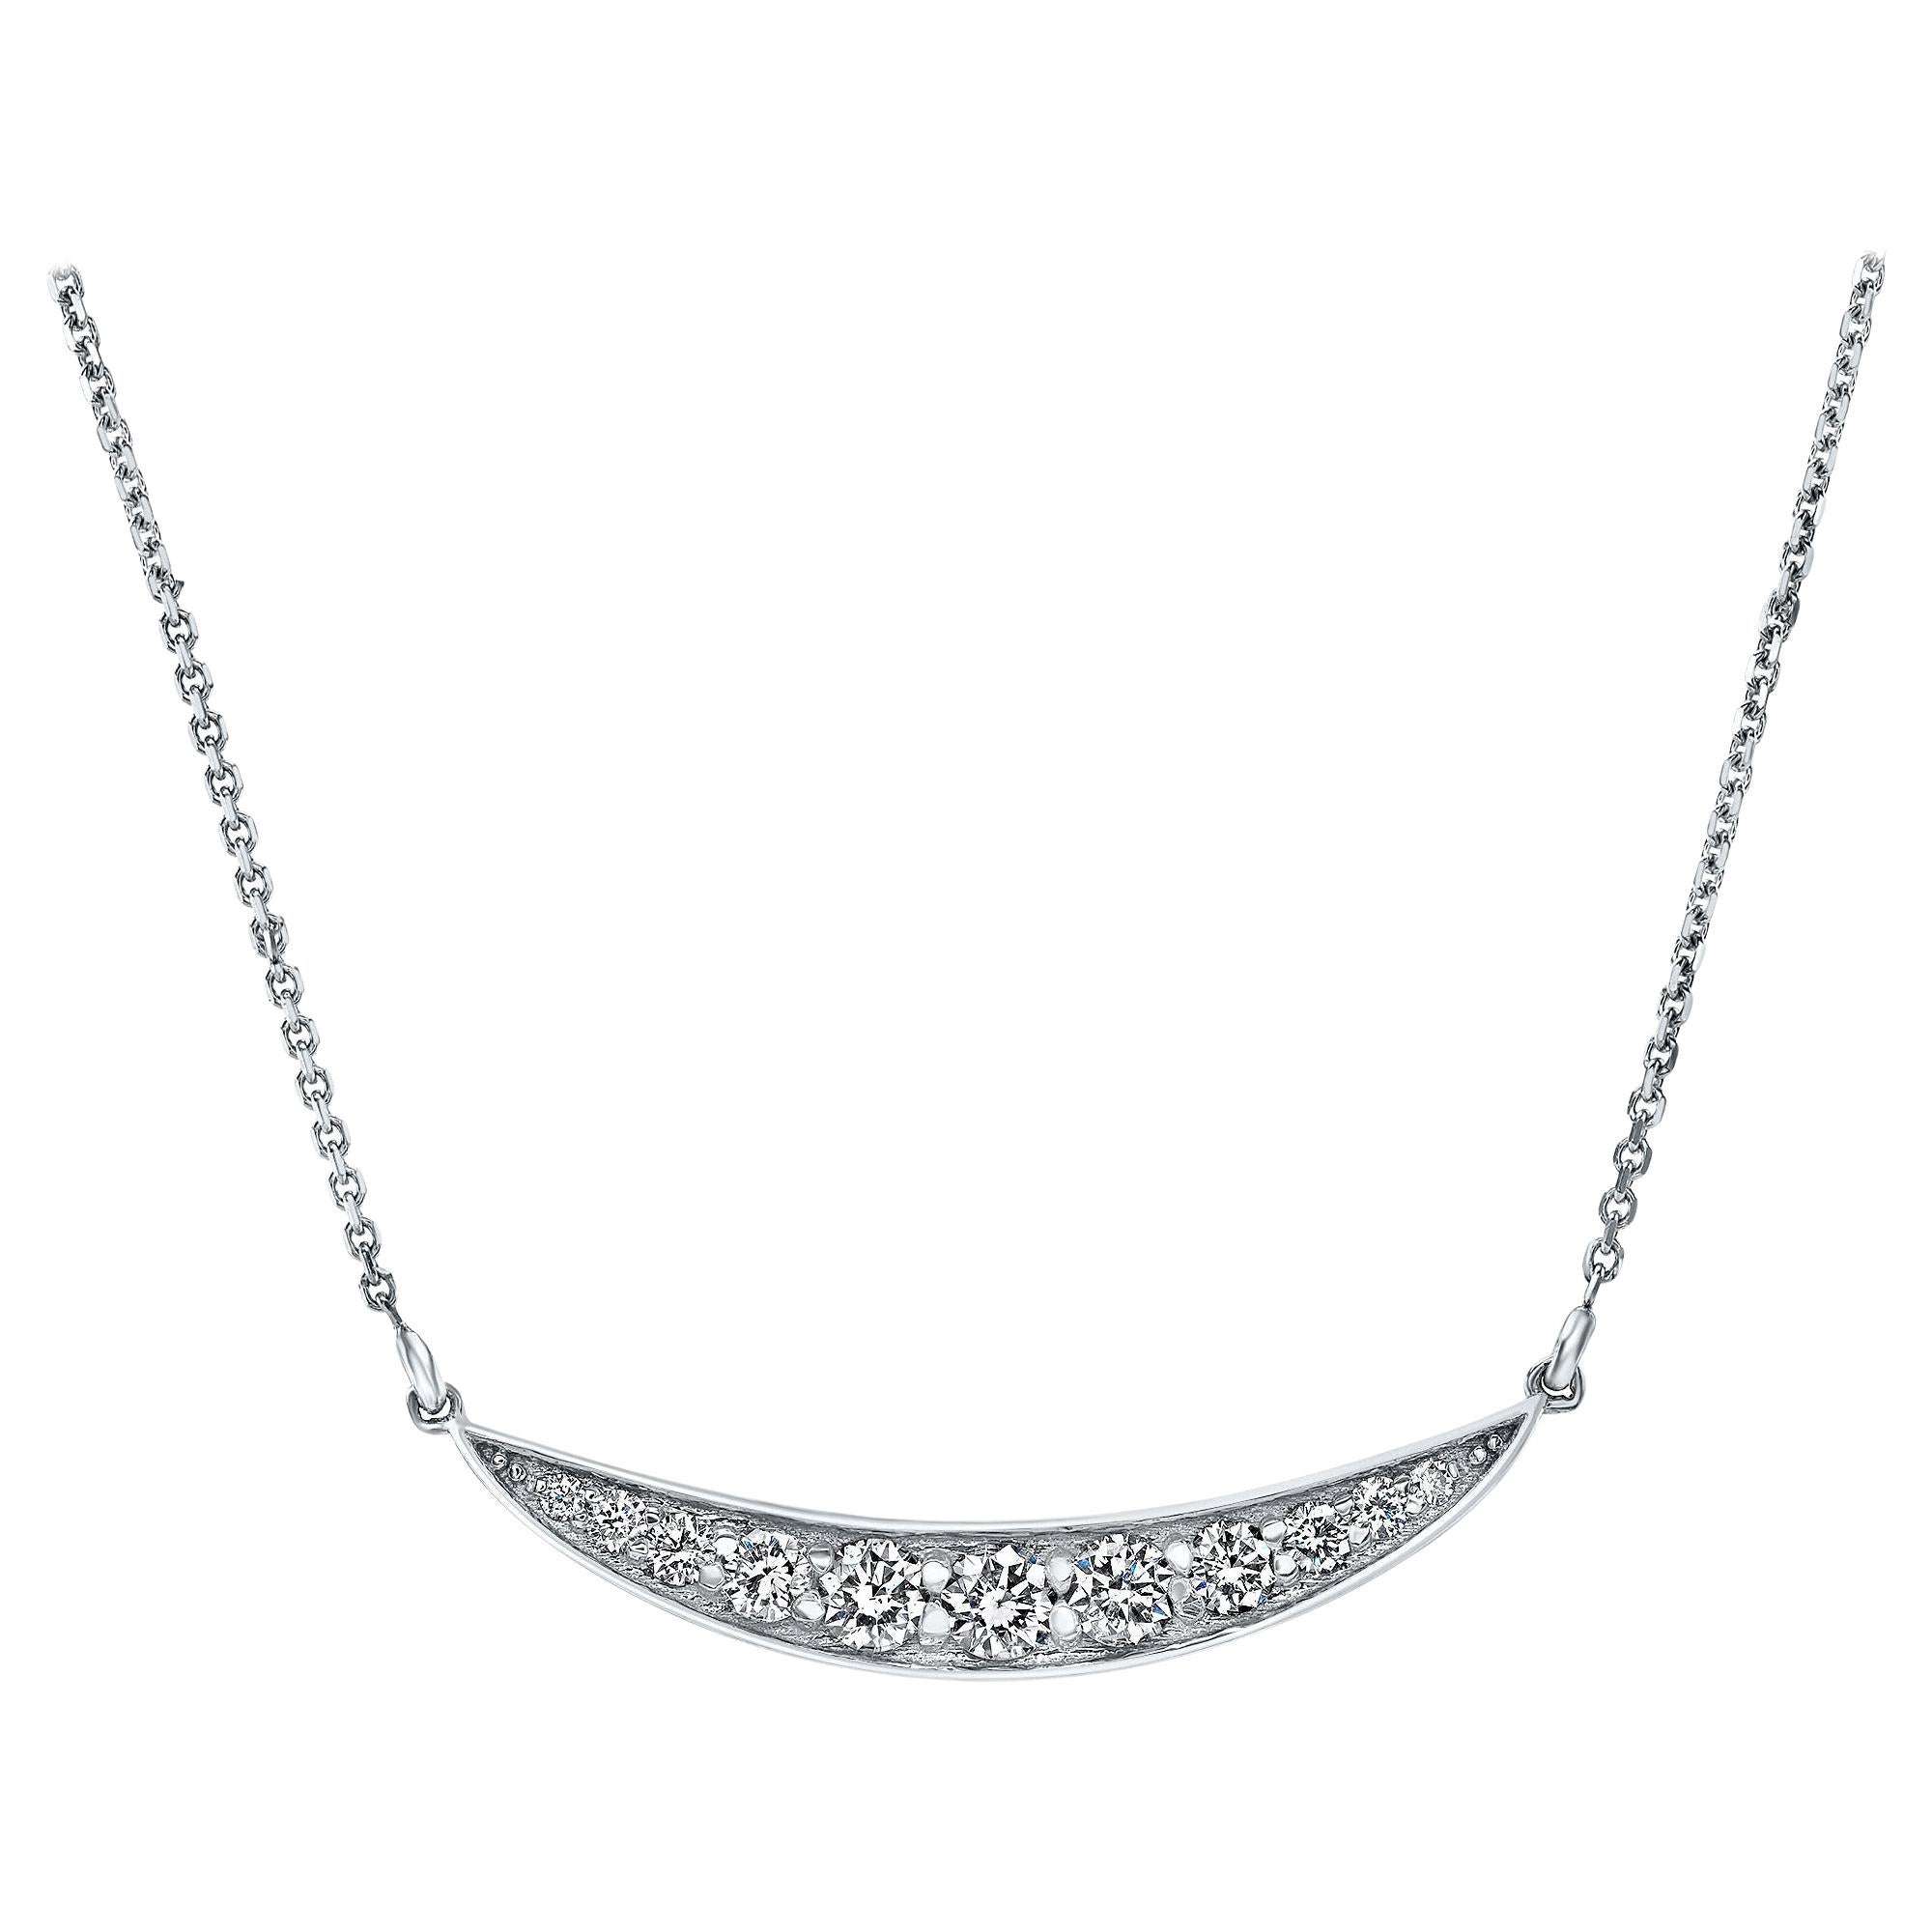 0.55 Carat Diamond Curved Pendant Necklace in 14k White Gold, Shlomit Rogel